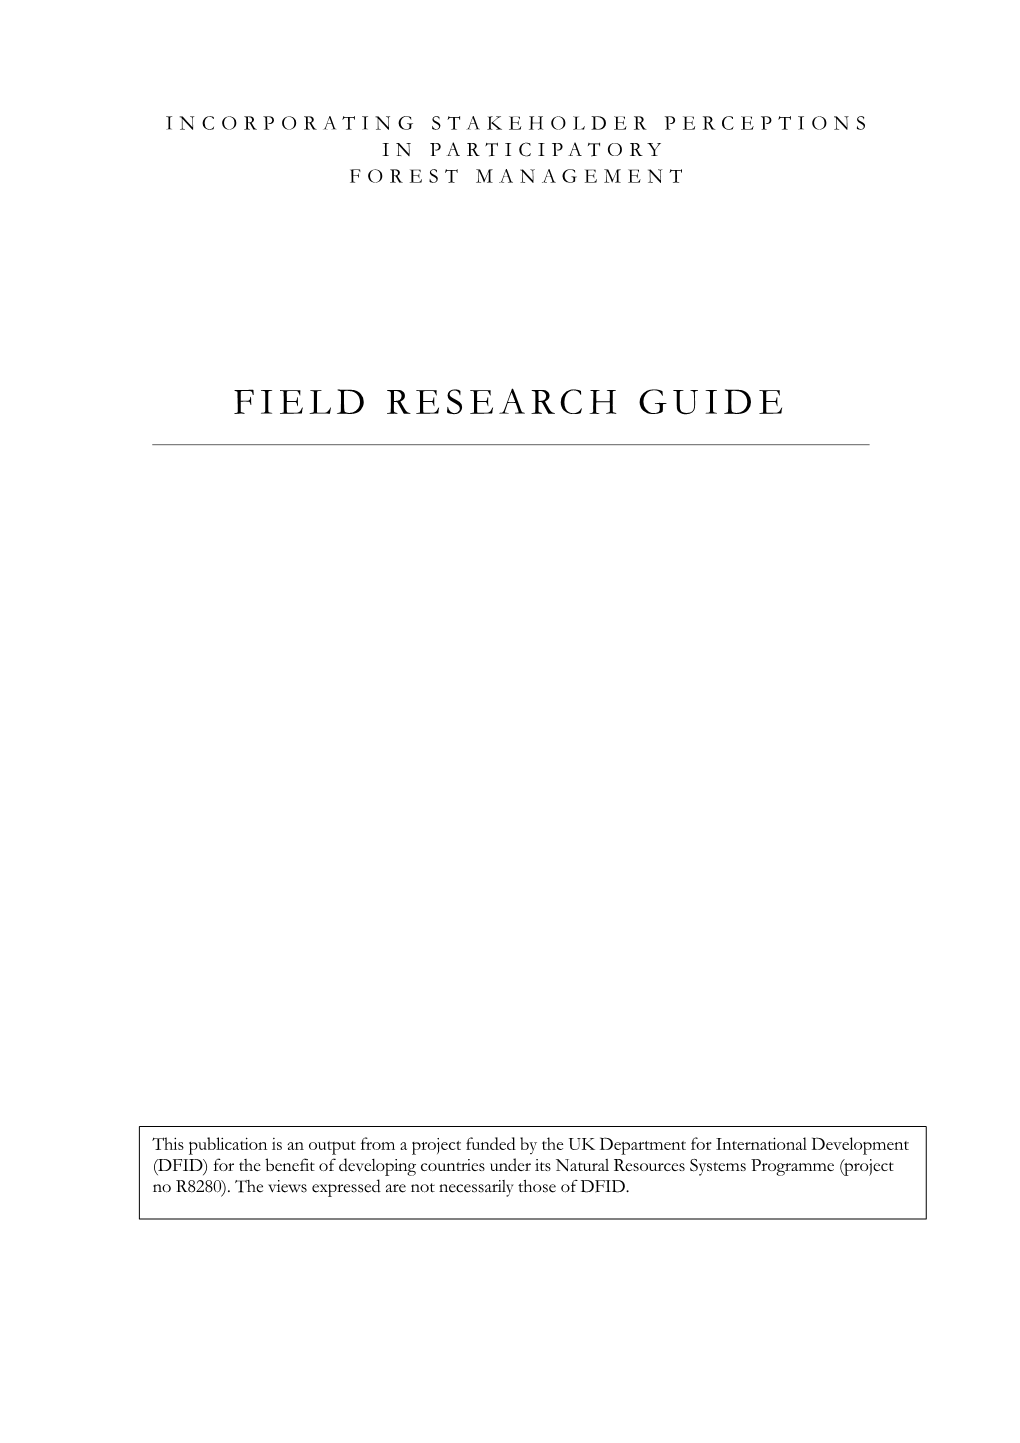 Field Research Guide